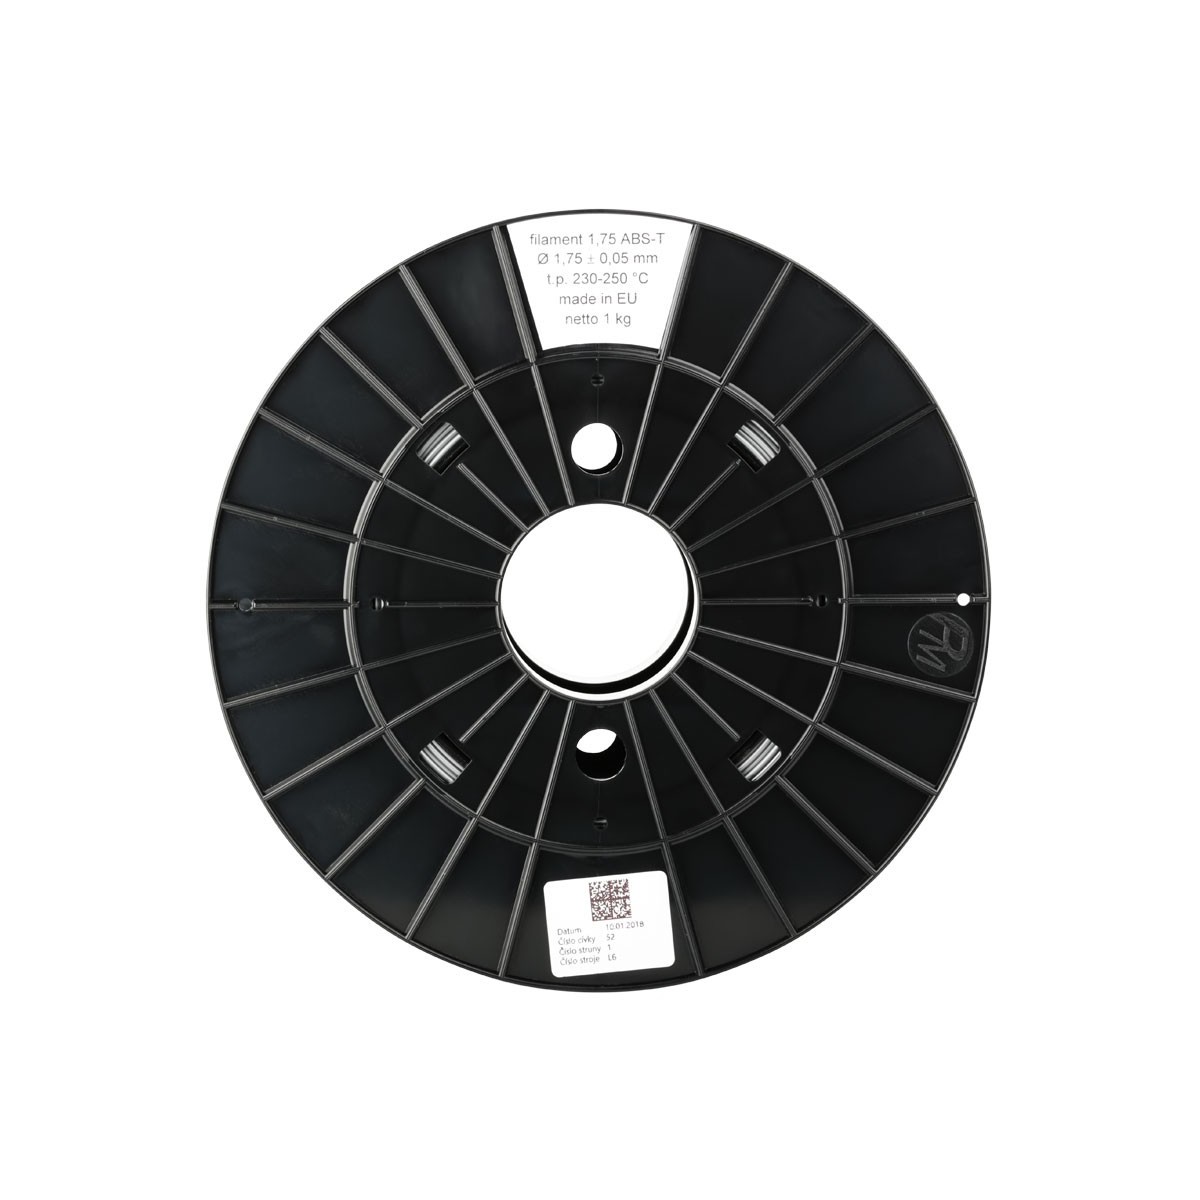 Black EasyABS filament 1kg